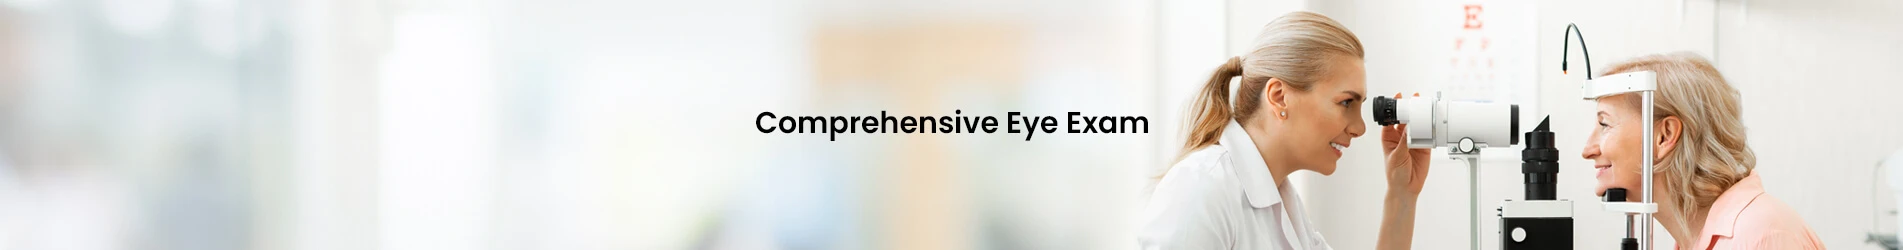 Eyes on Brickell: Comprehensive Eye Exams- banner